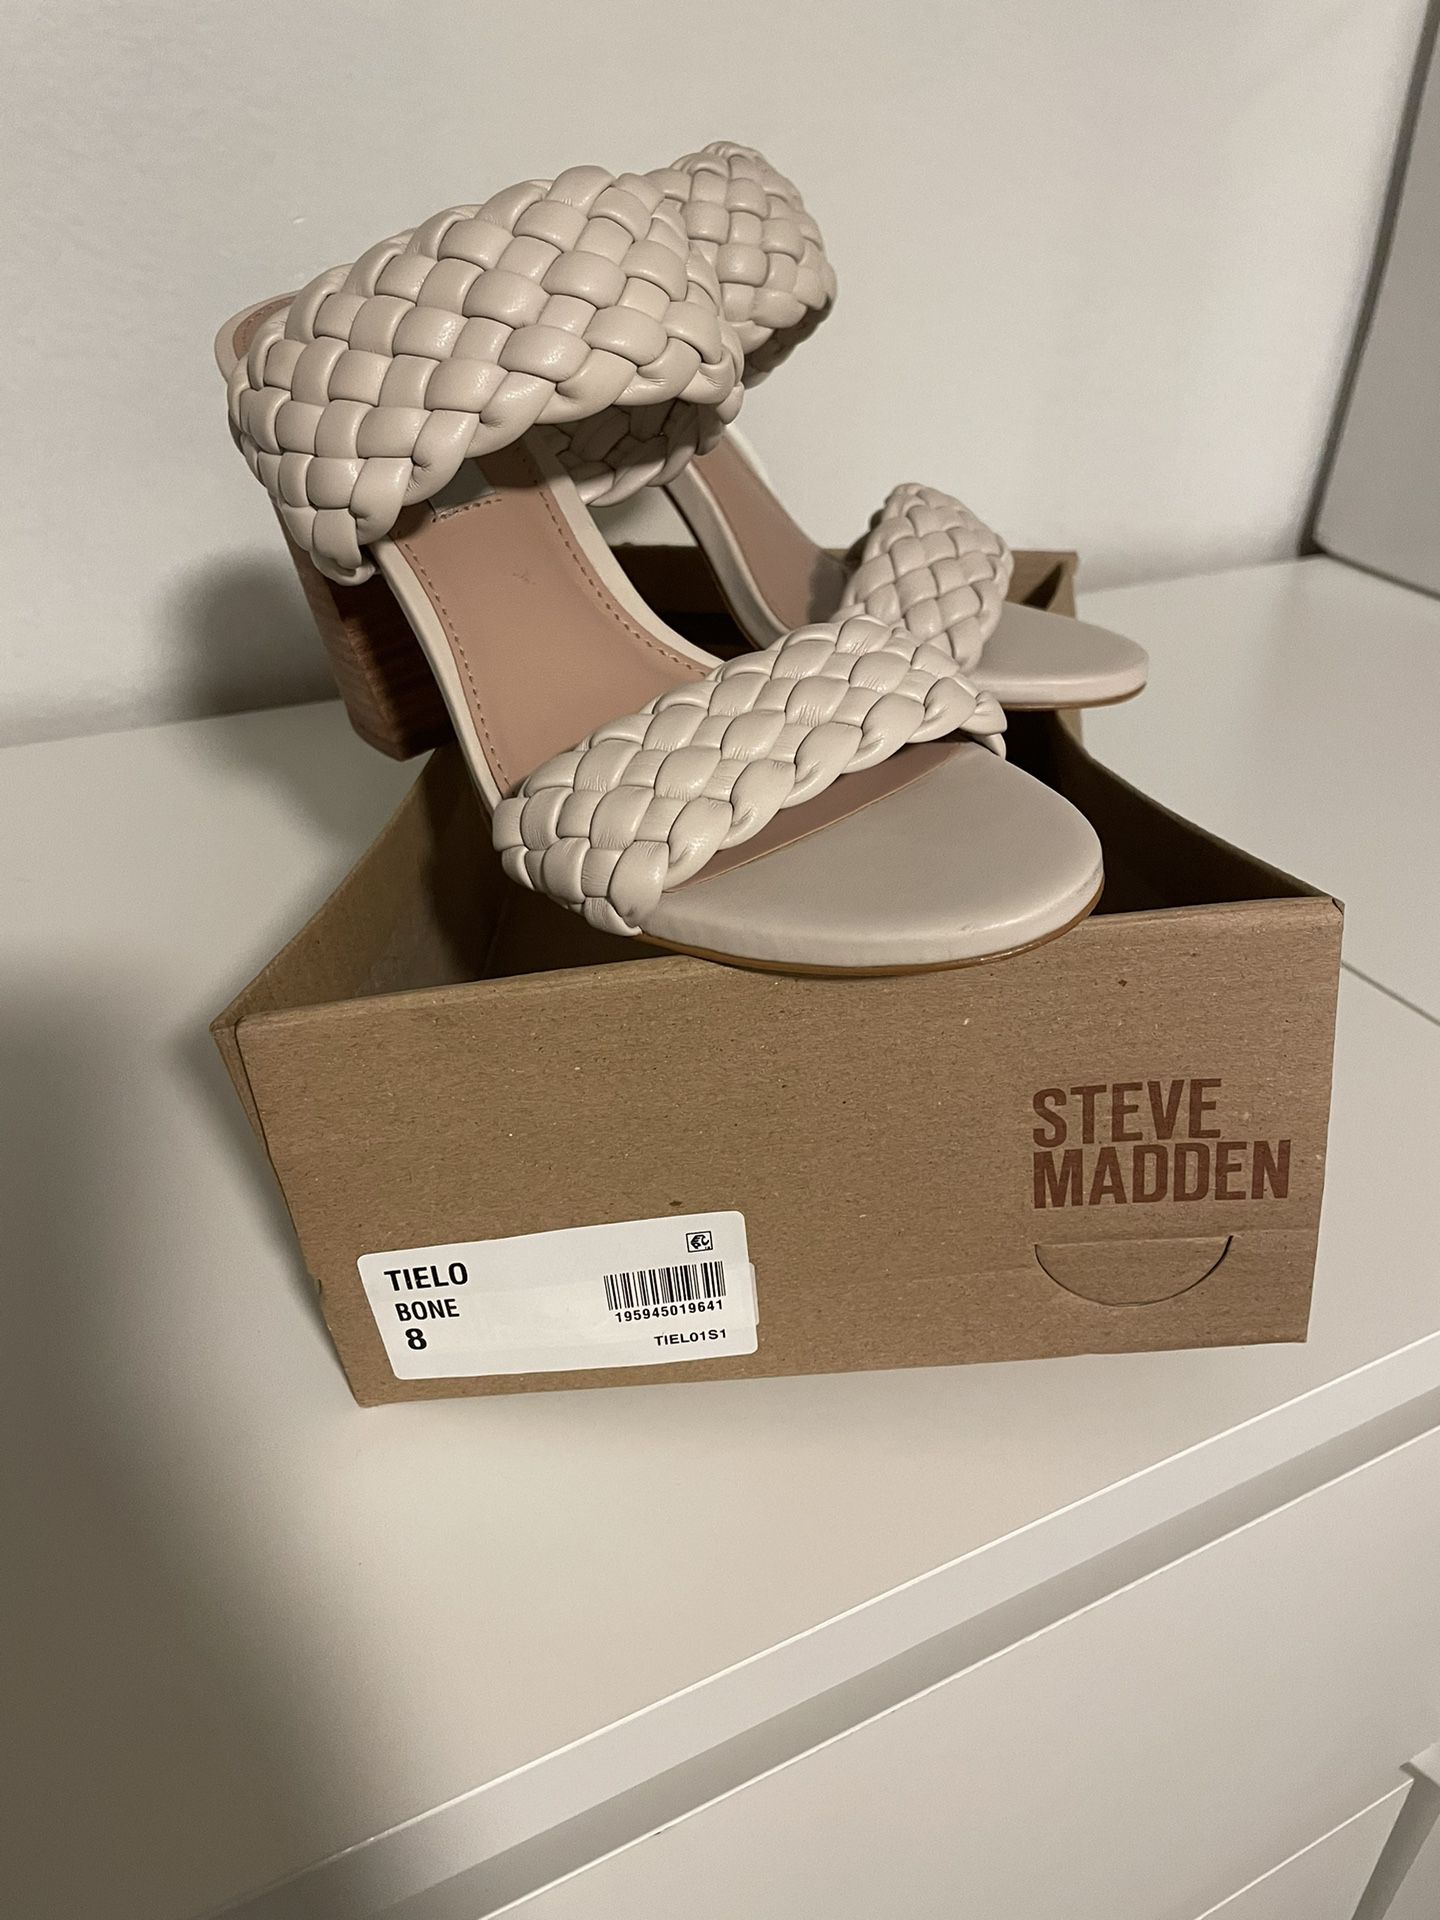 Steve Madden heels